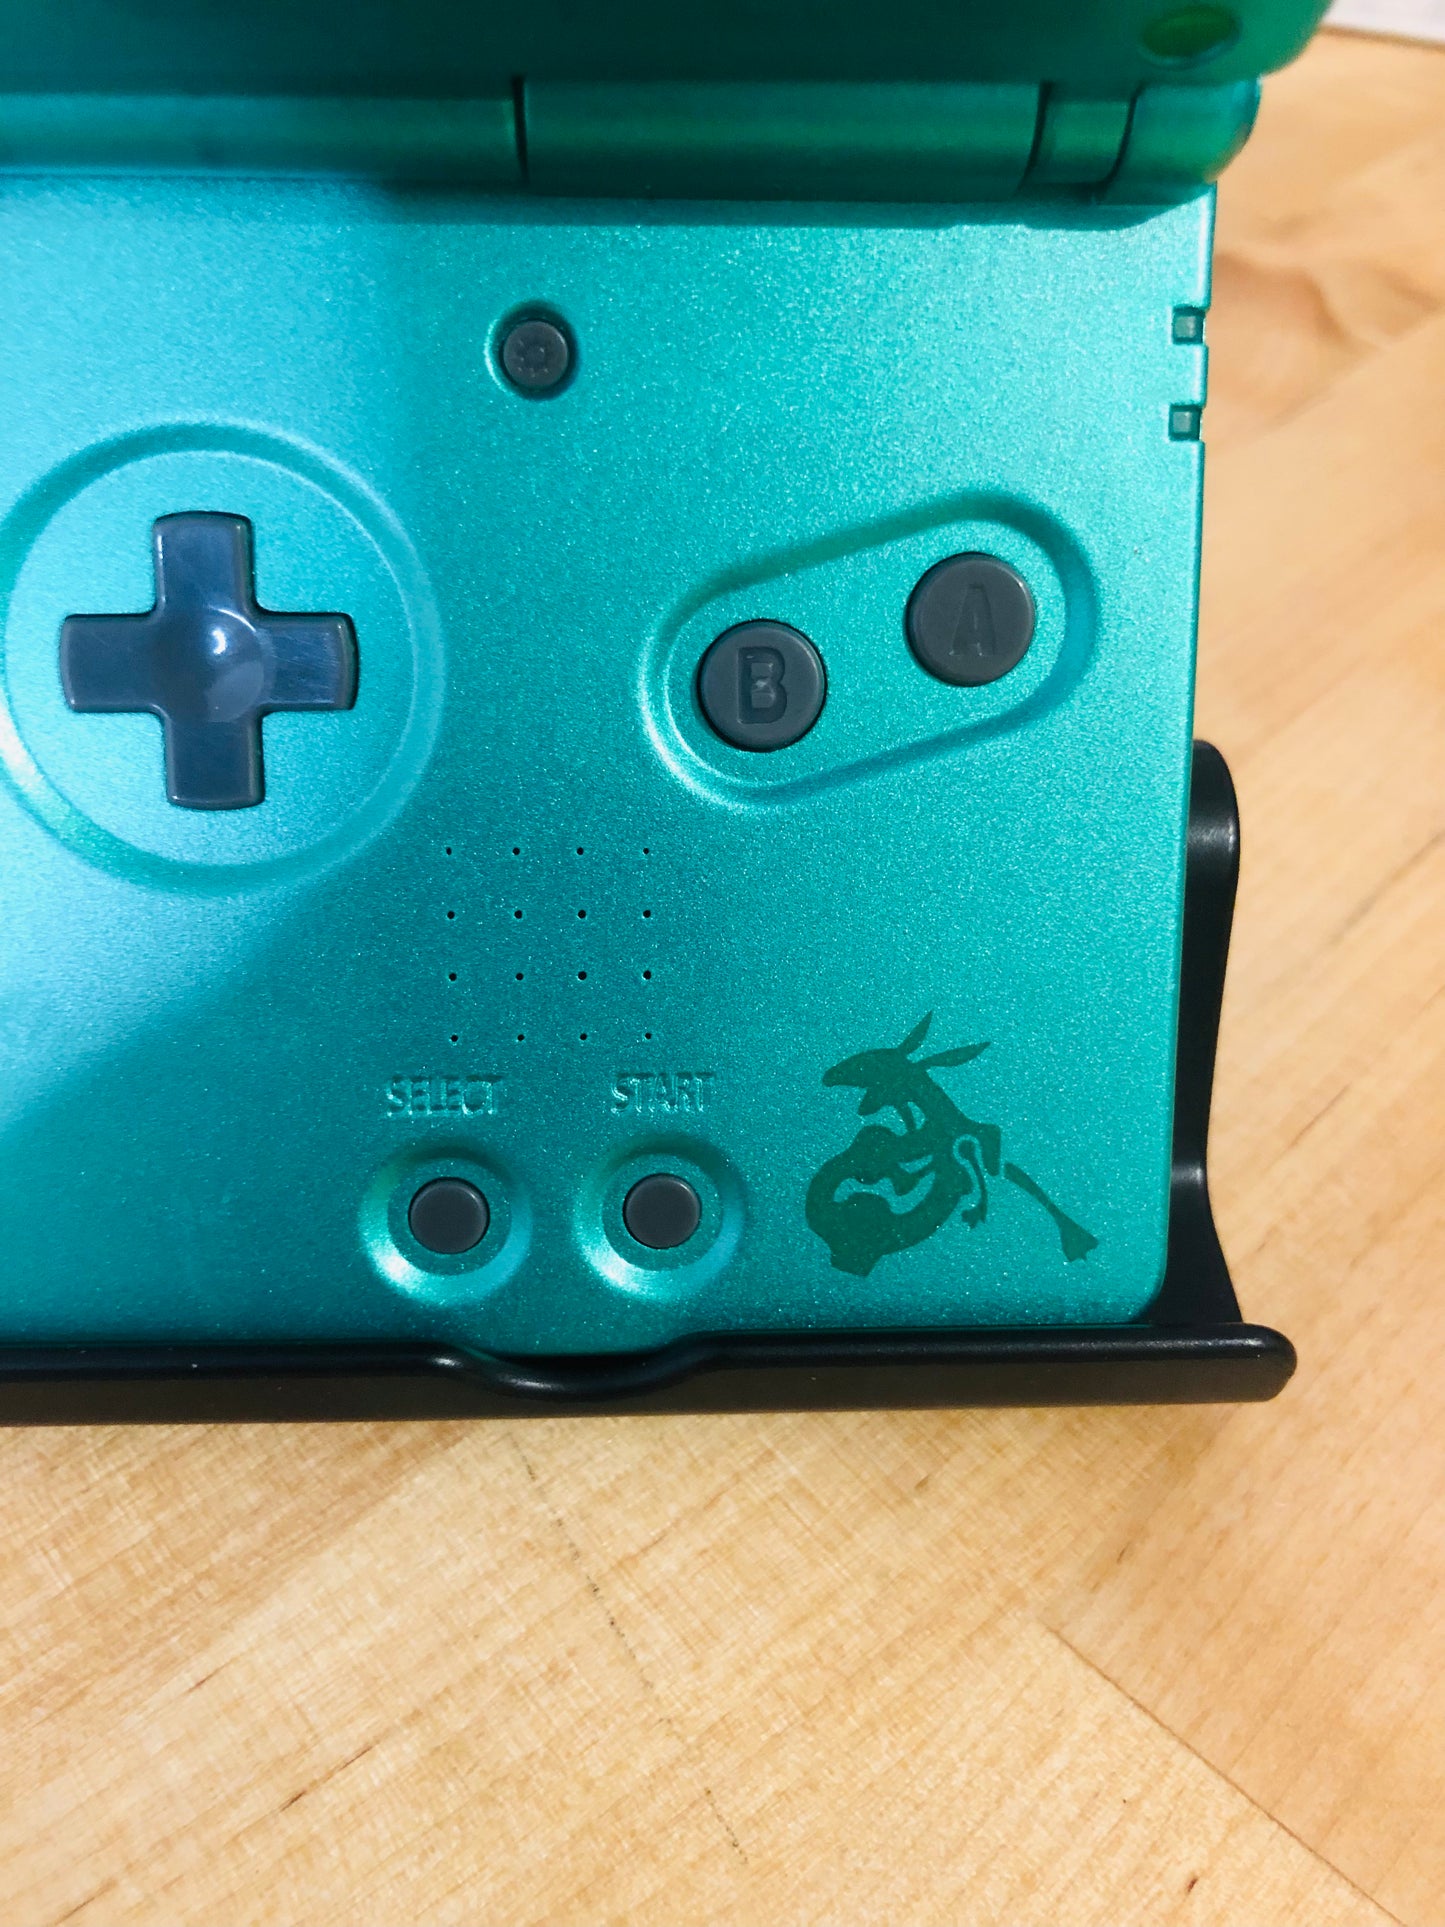 Custom Pokémon Green Nintendo Gameboy Advance SP System